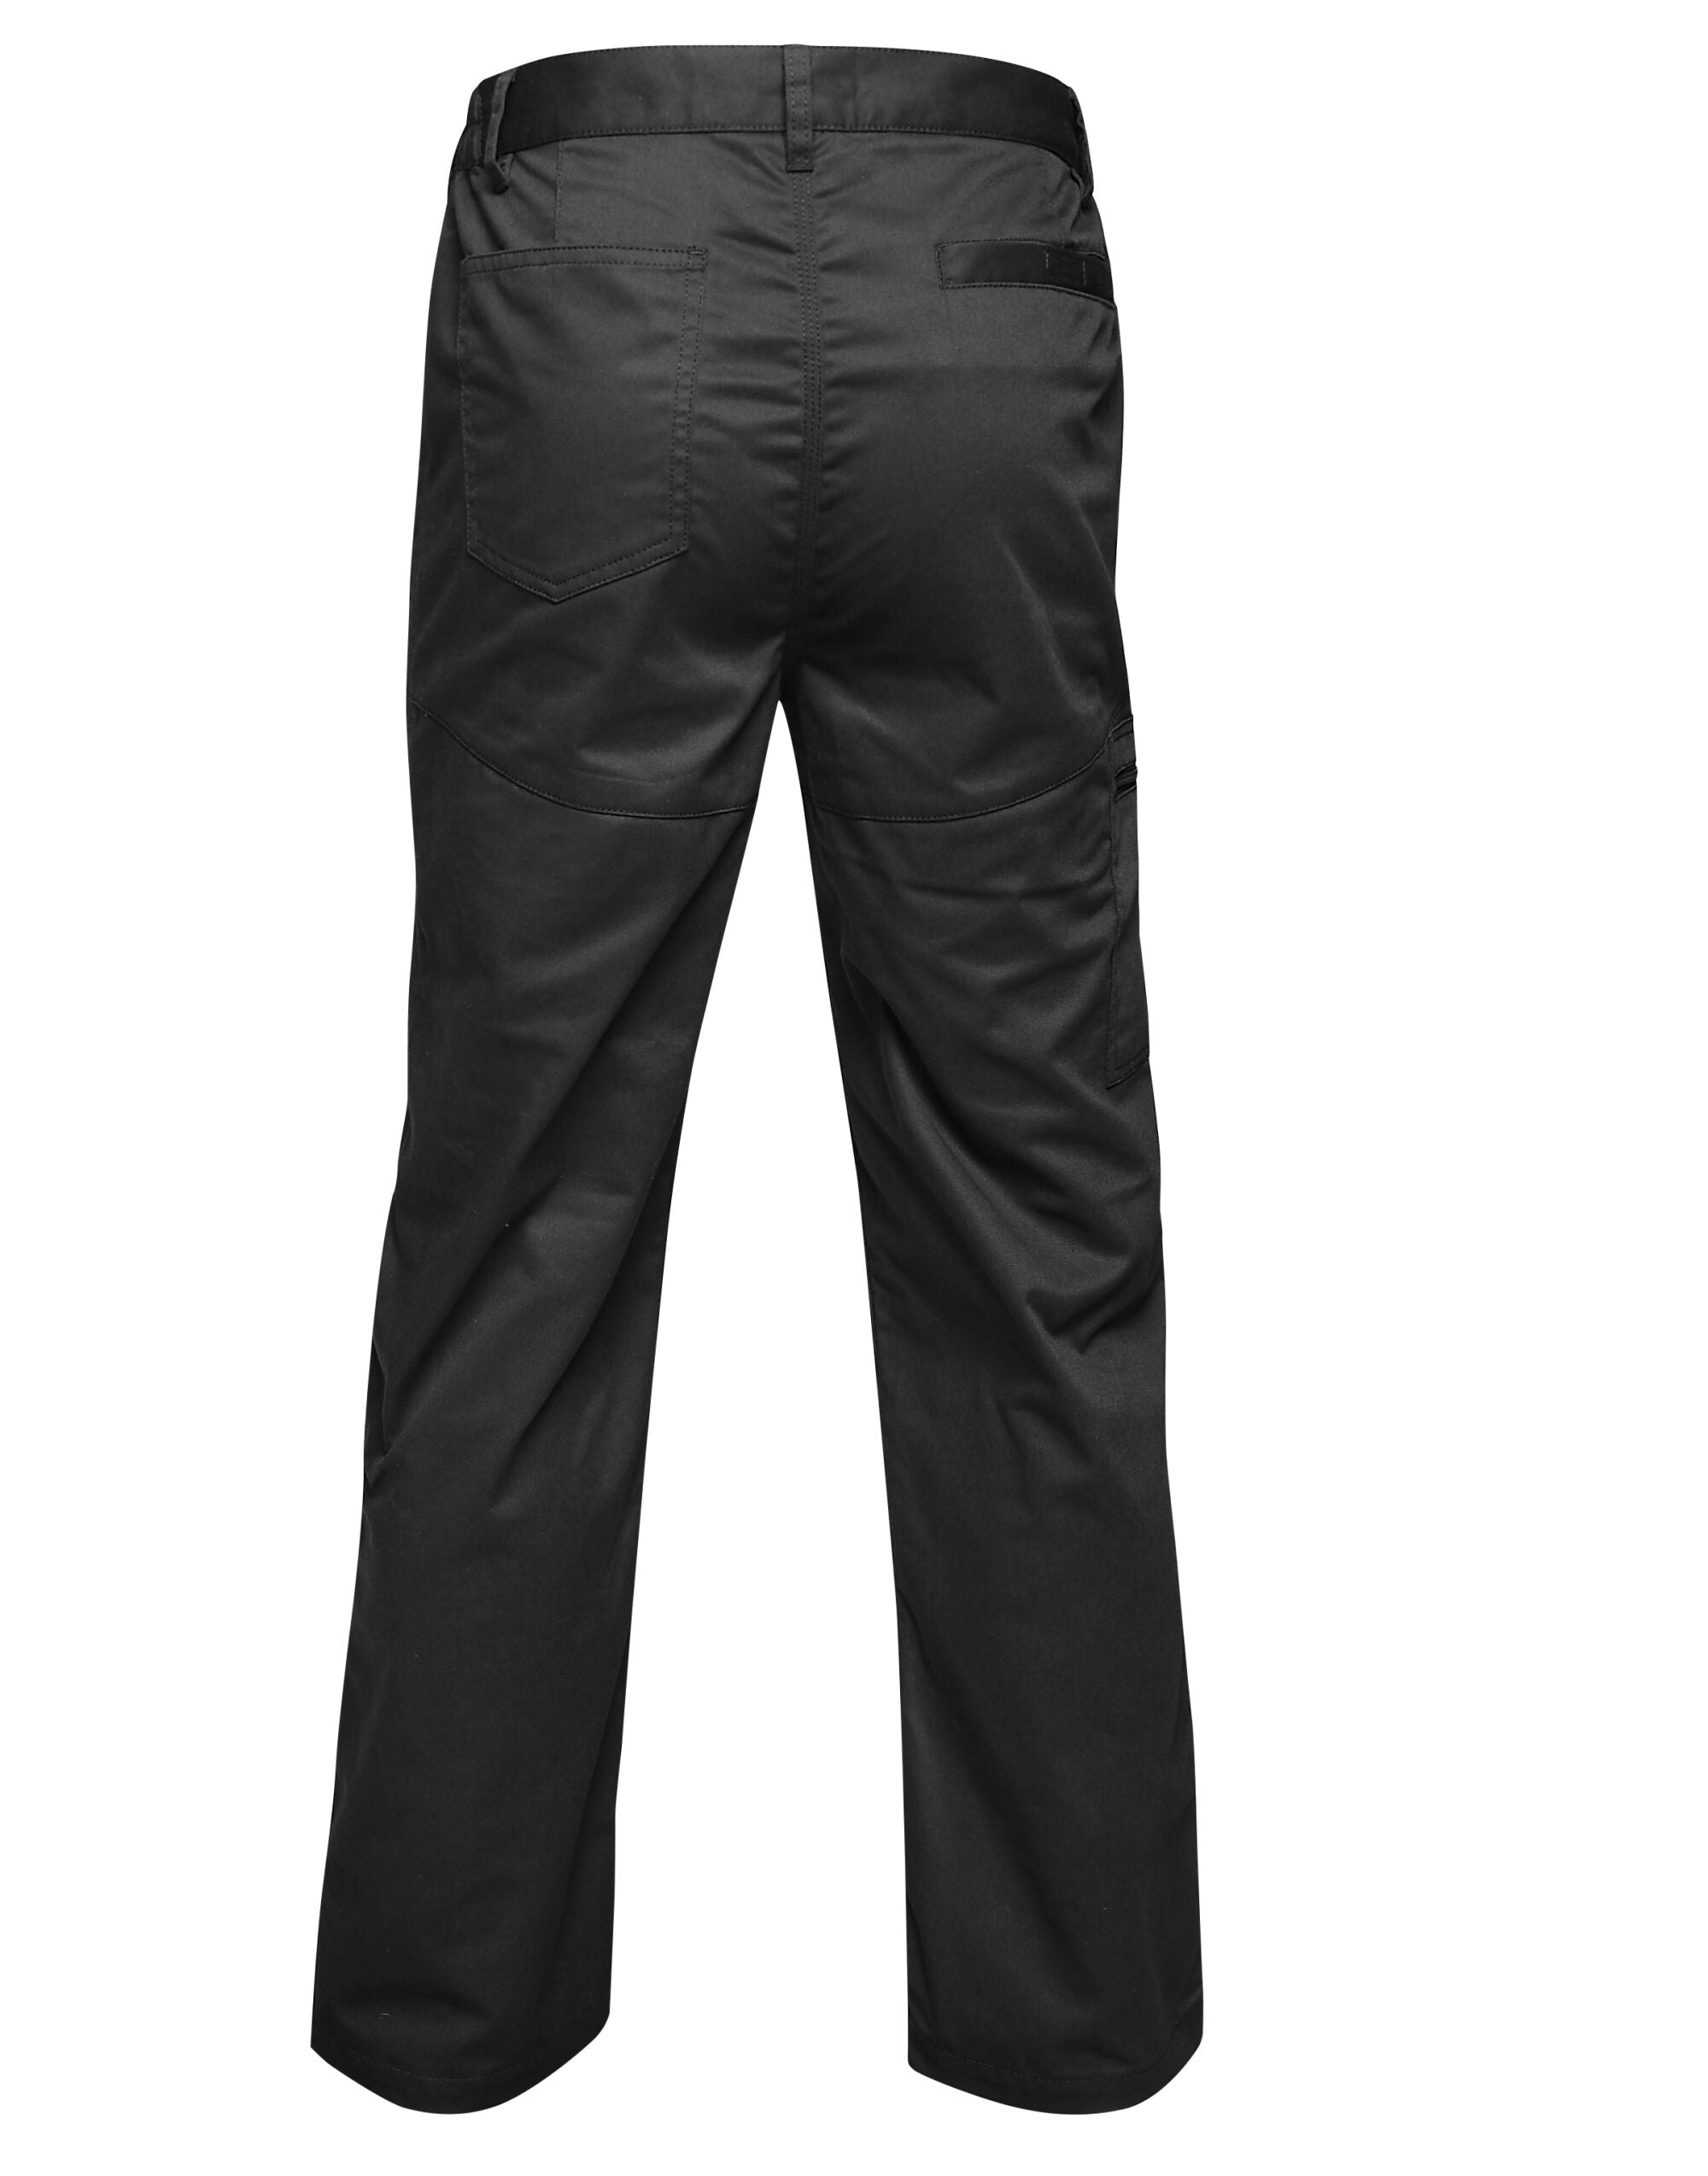 REGATTA PROFESSIONAL Pro Action Trouser (L) Durable water repellent finish (TRJ600L)